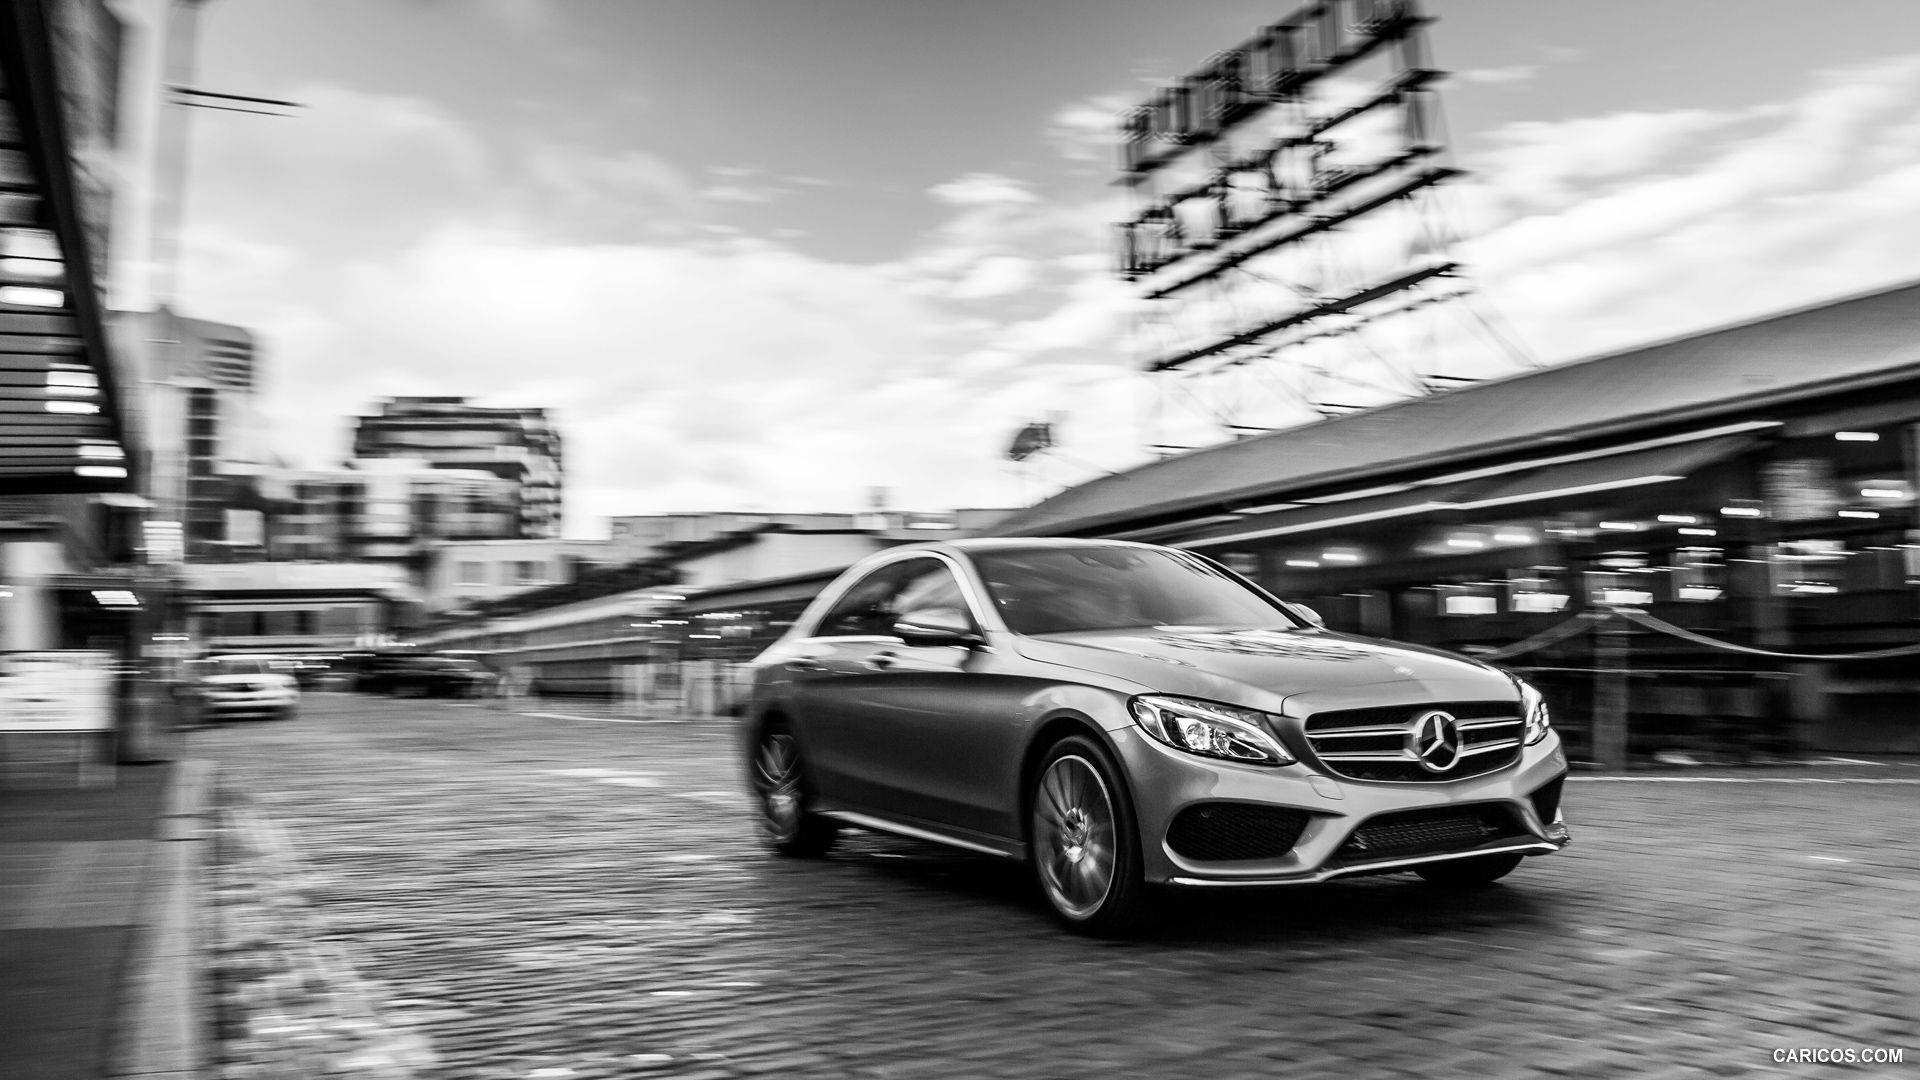 Sleek Mercedes Benz C300 With A Striking City Backdrop